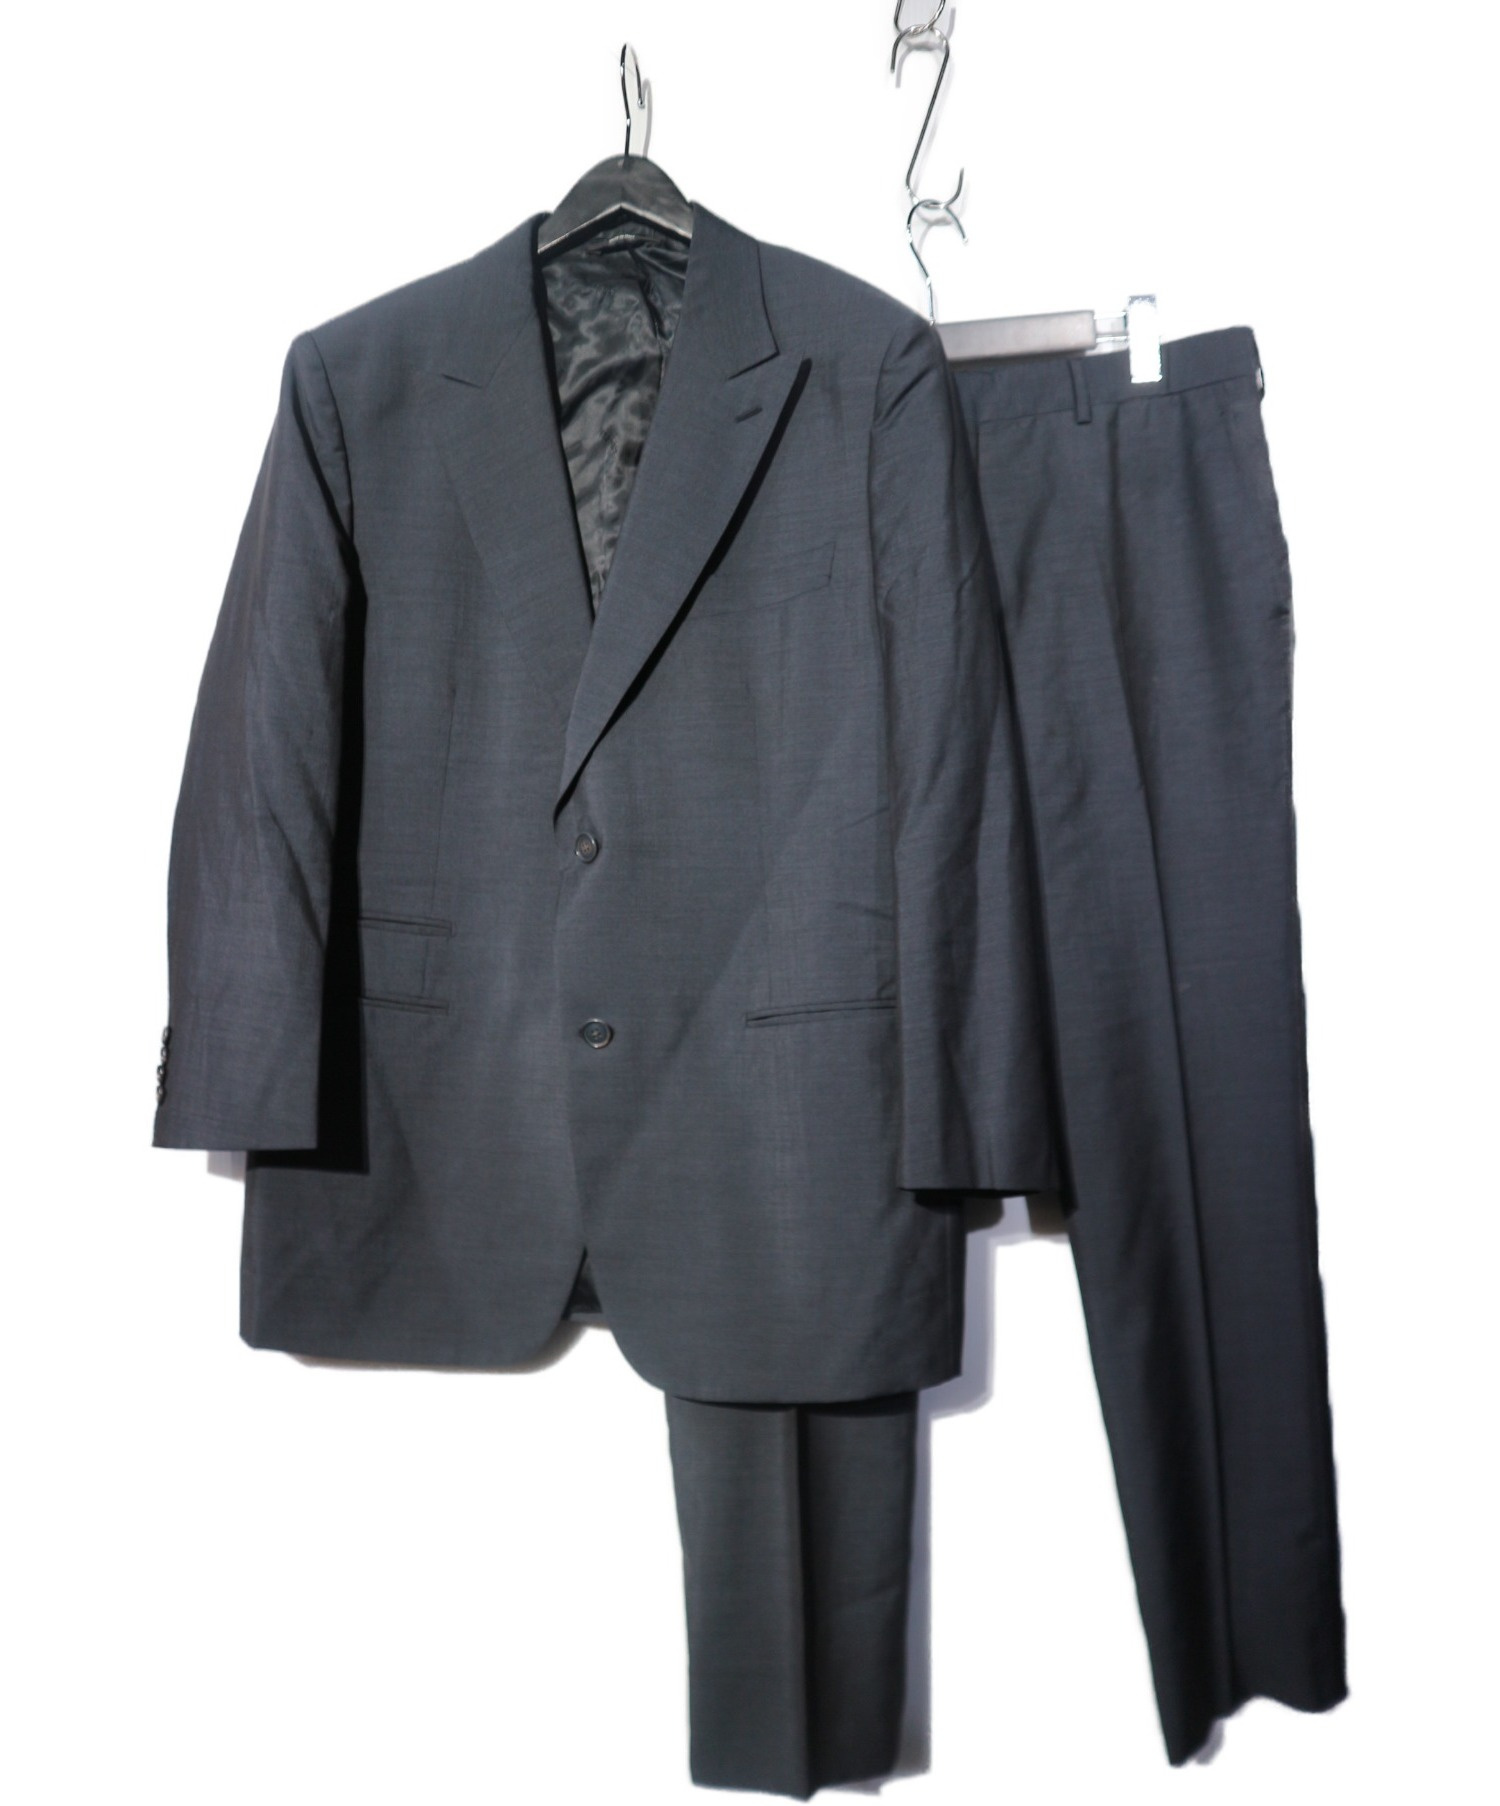 HERMES (エルメス) セットアップ2Bスーツ チャコールグレー サイズ:表記無し（実寸をご確認下さい） エルメスジャポンタグ